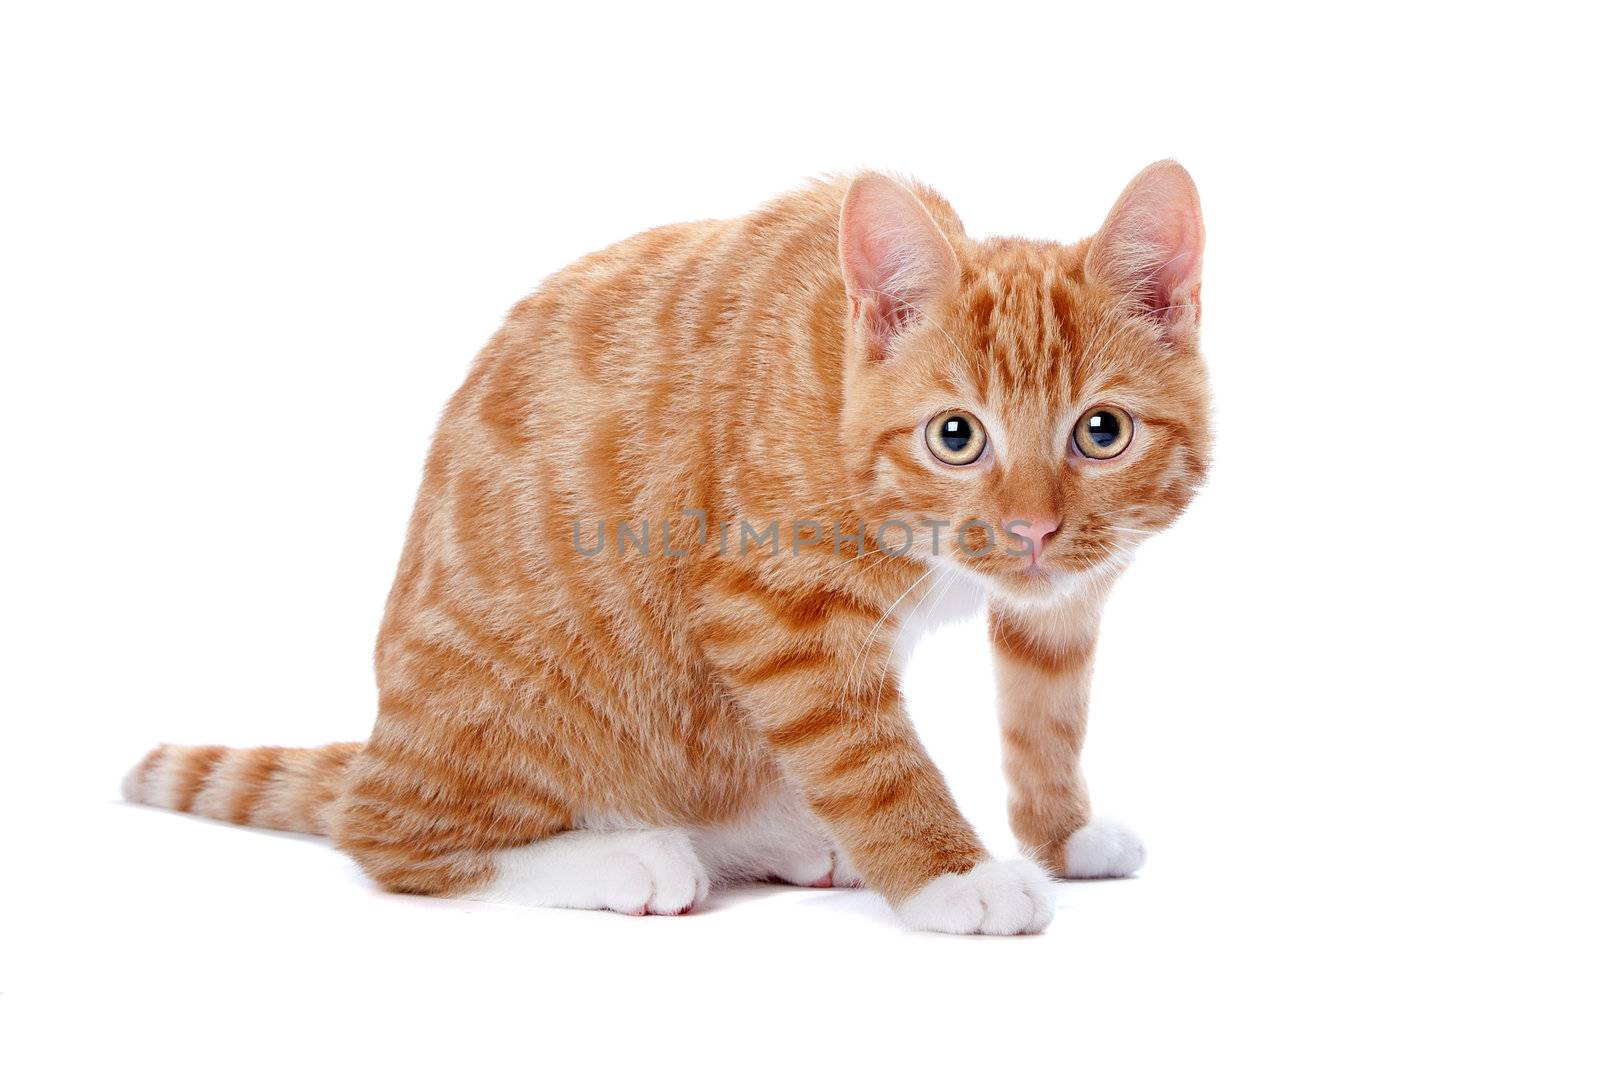 Cute foxy-red kitten sitting on white background